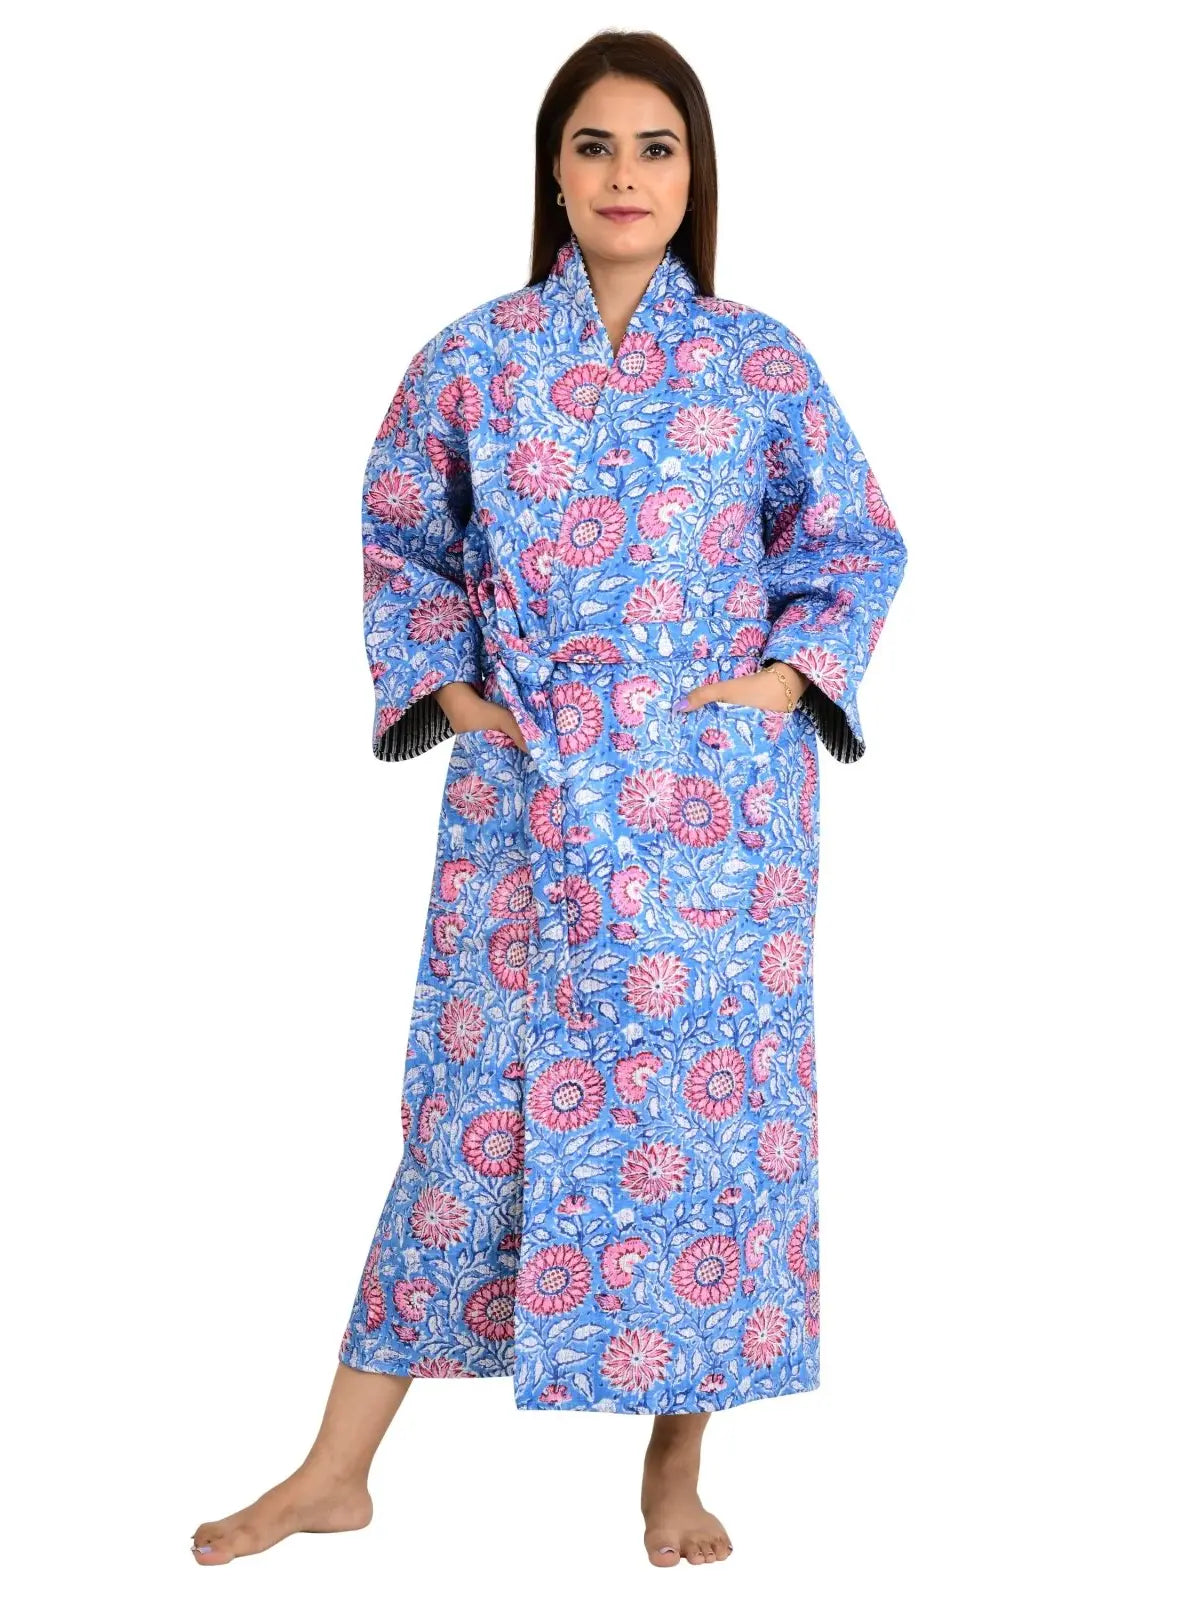 Kantha Quilted Pure Cotton Reversible Long Kimono Women Blue Pink Sun Flower